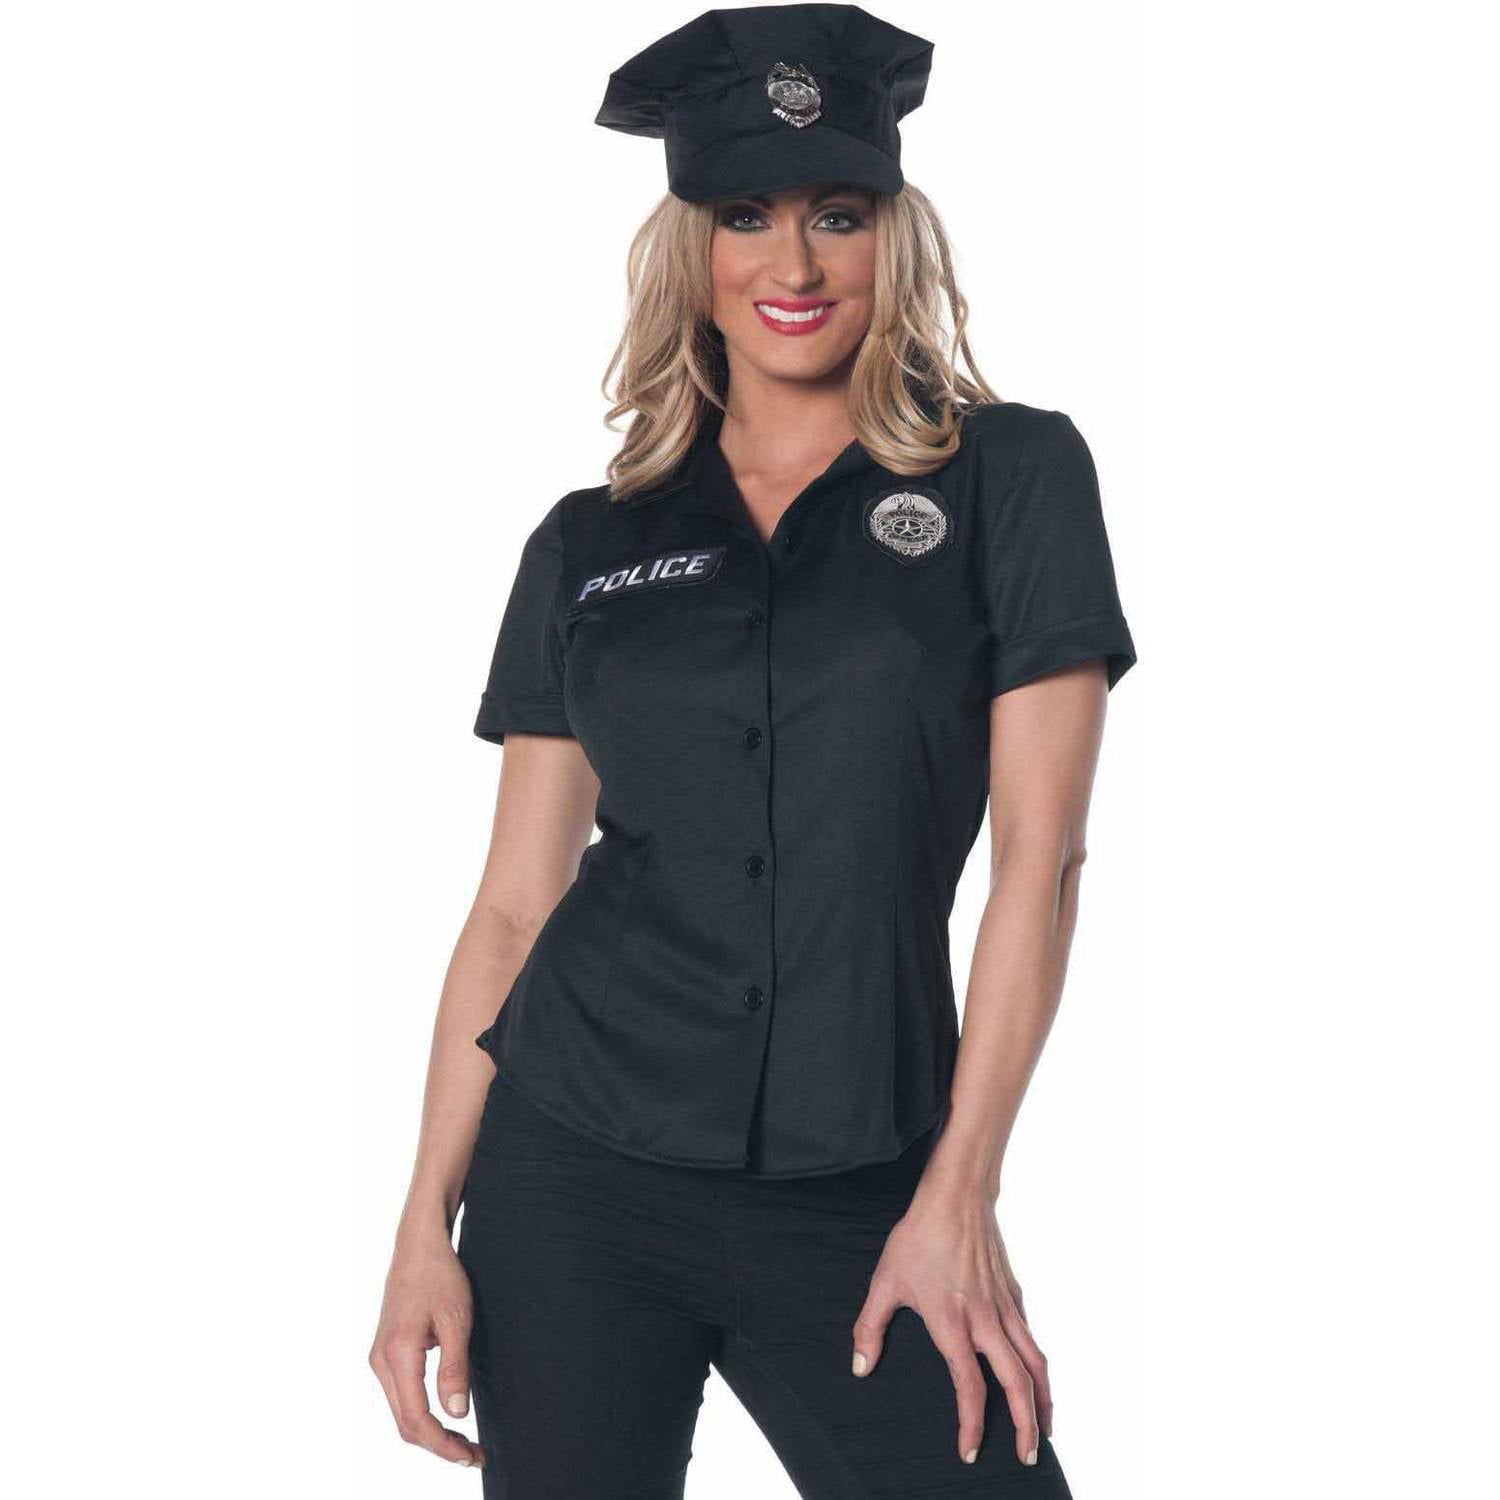 Men's Police Uniform Security Costume Polyester Quality Dark Navy Shirt 